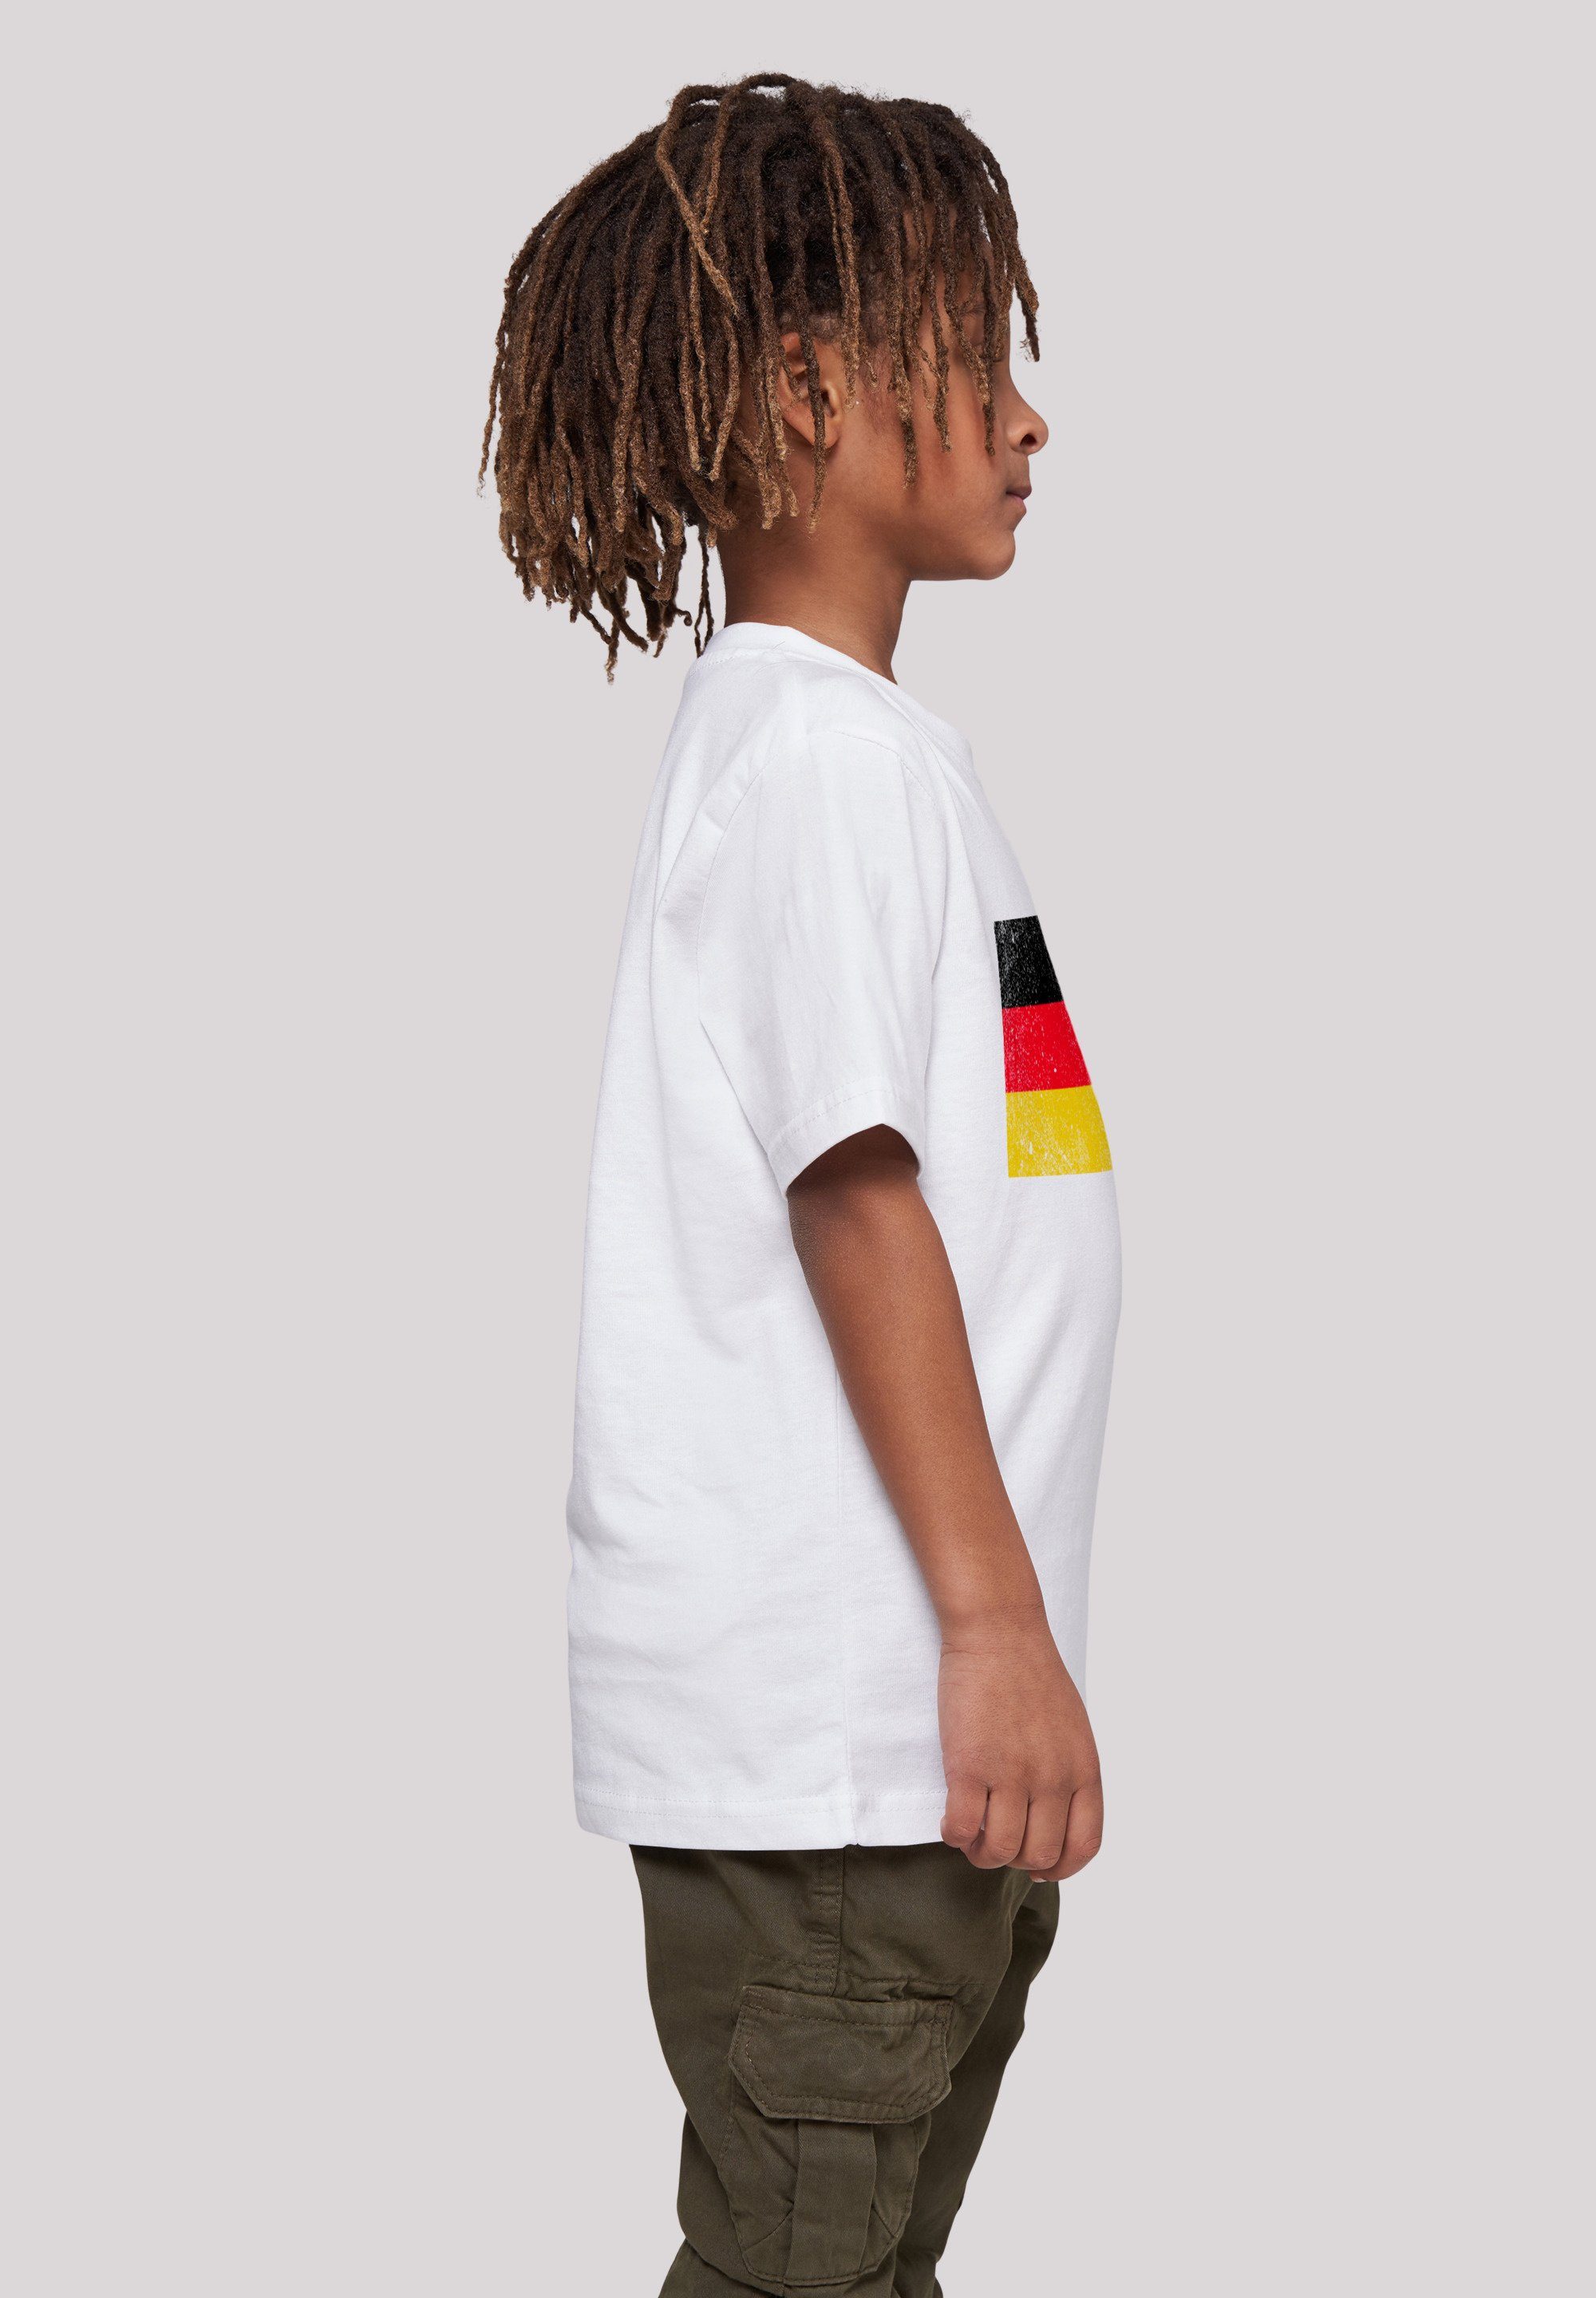 F4NT4STIC Print Flagge weiß T-Shirt distressed Deutschland Germany